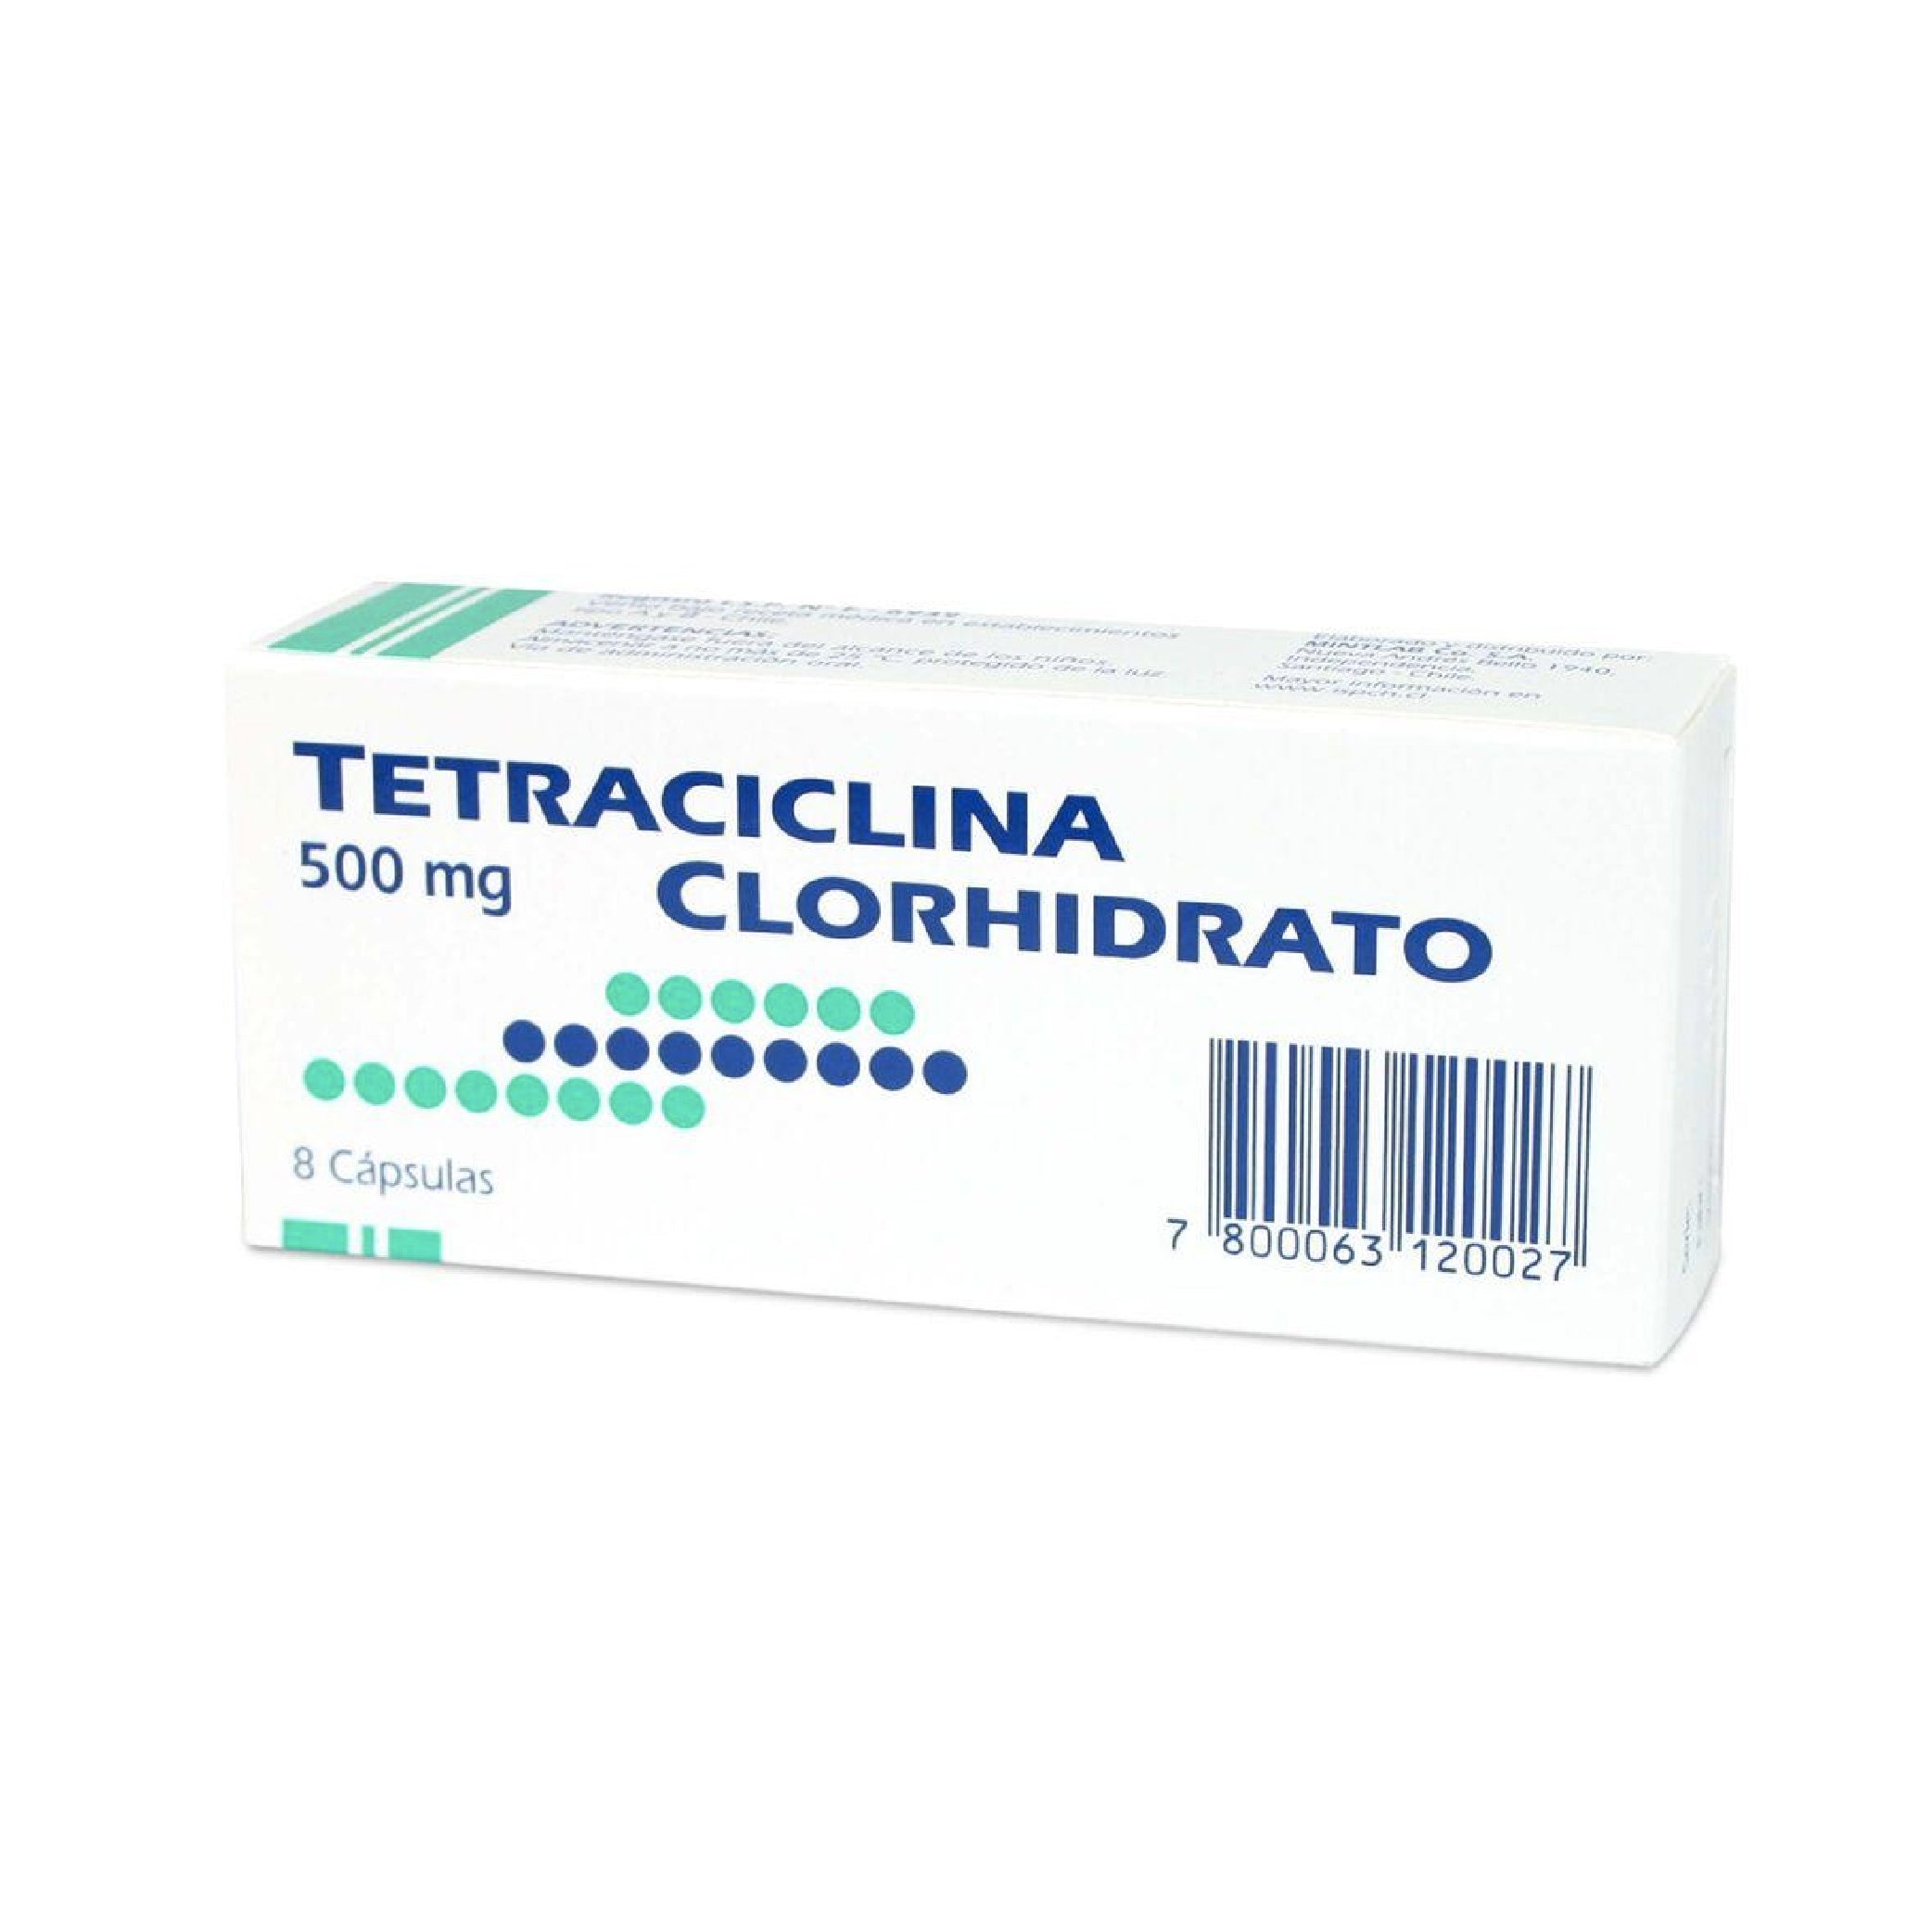 TETRACICLINA MINTLAB 500mg Caps. x 8